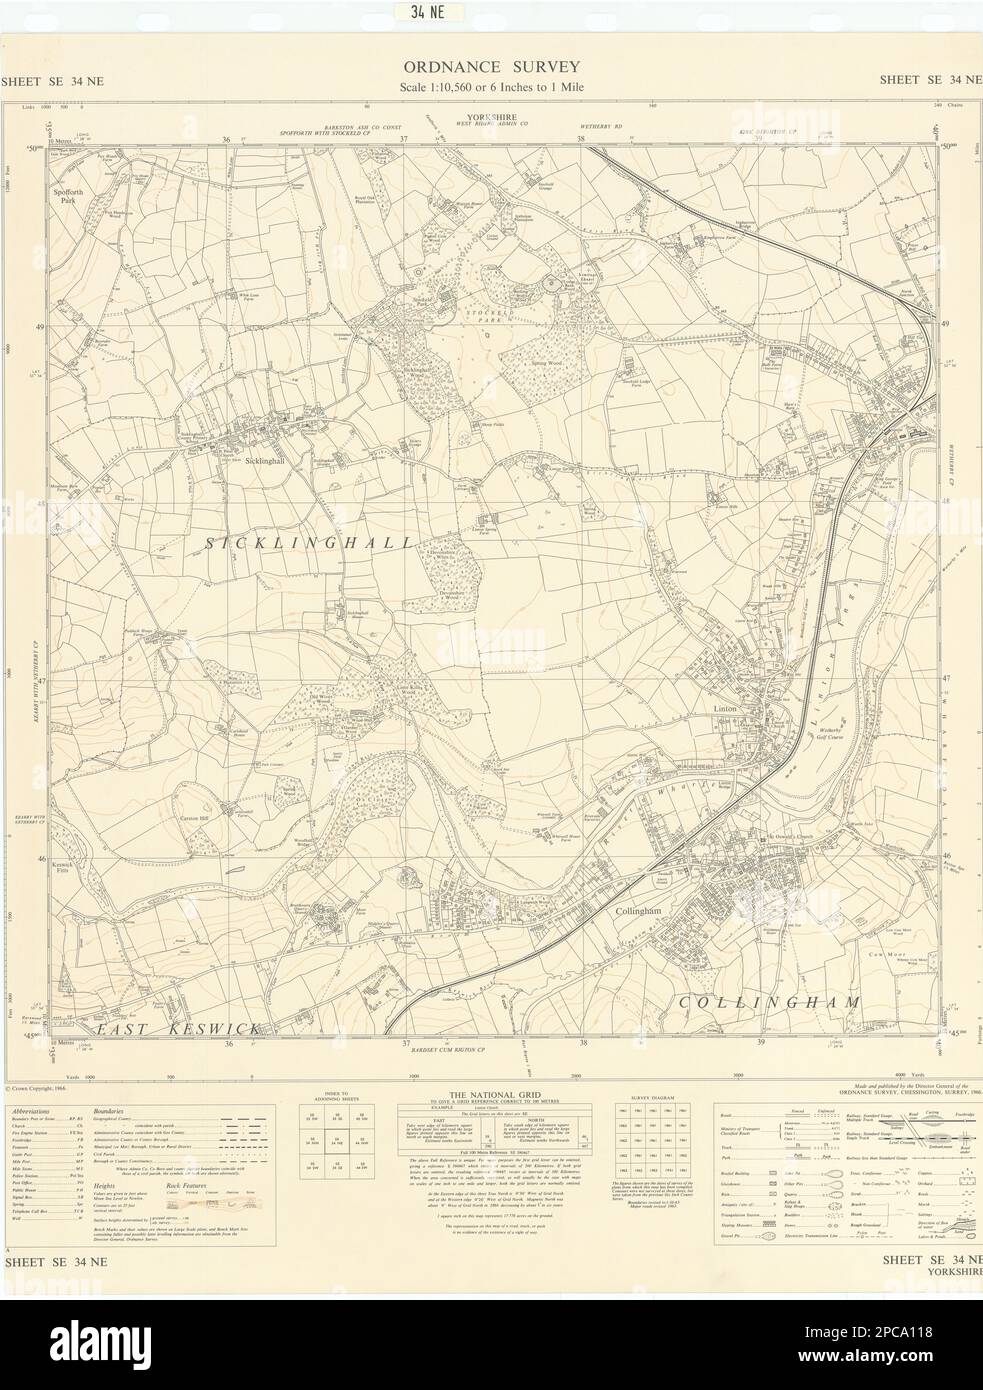 Ordnance Survey SE34NE Yorks Collingham Linton Sicklinghall Wetherby 1966 mapa Foto de stock